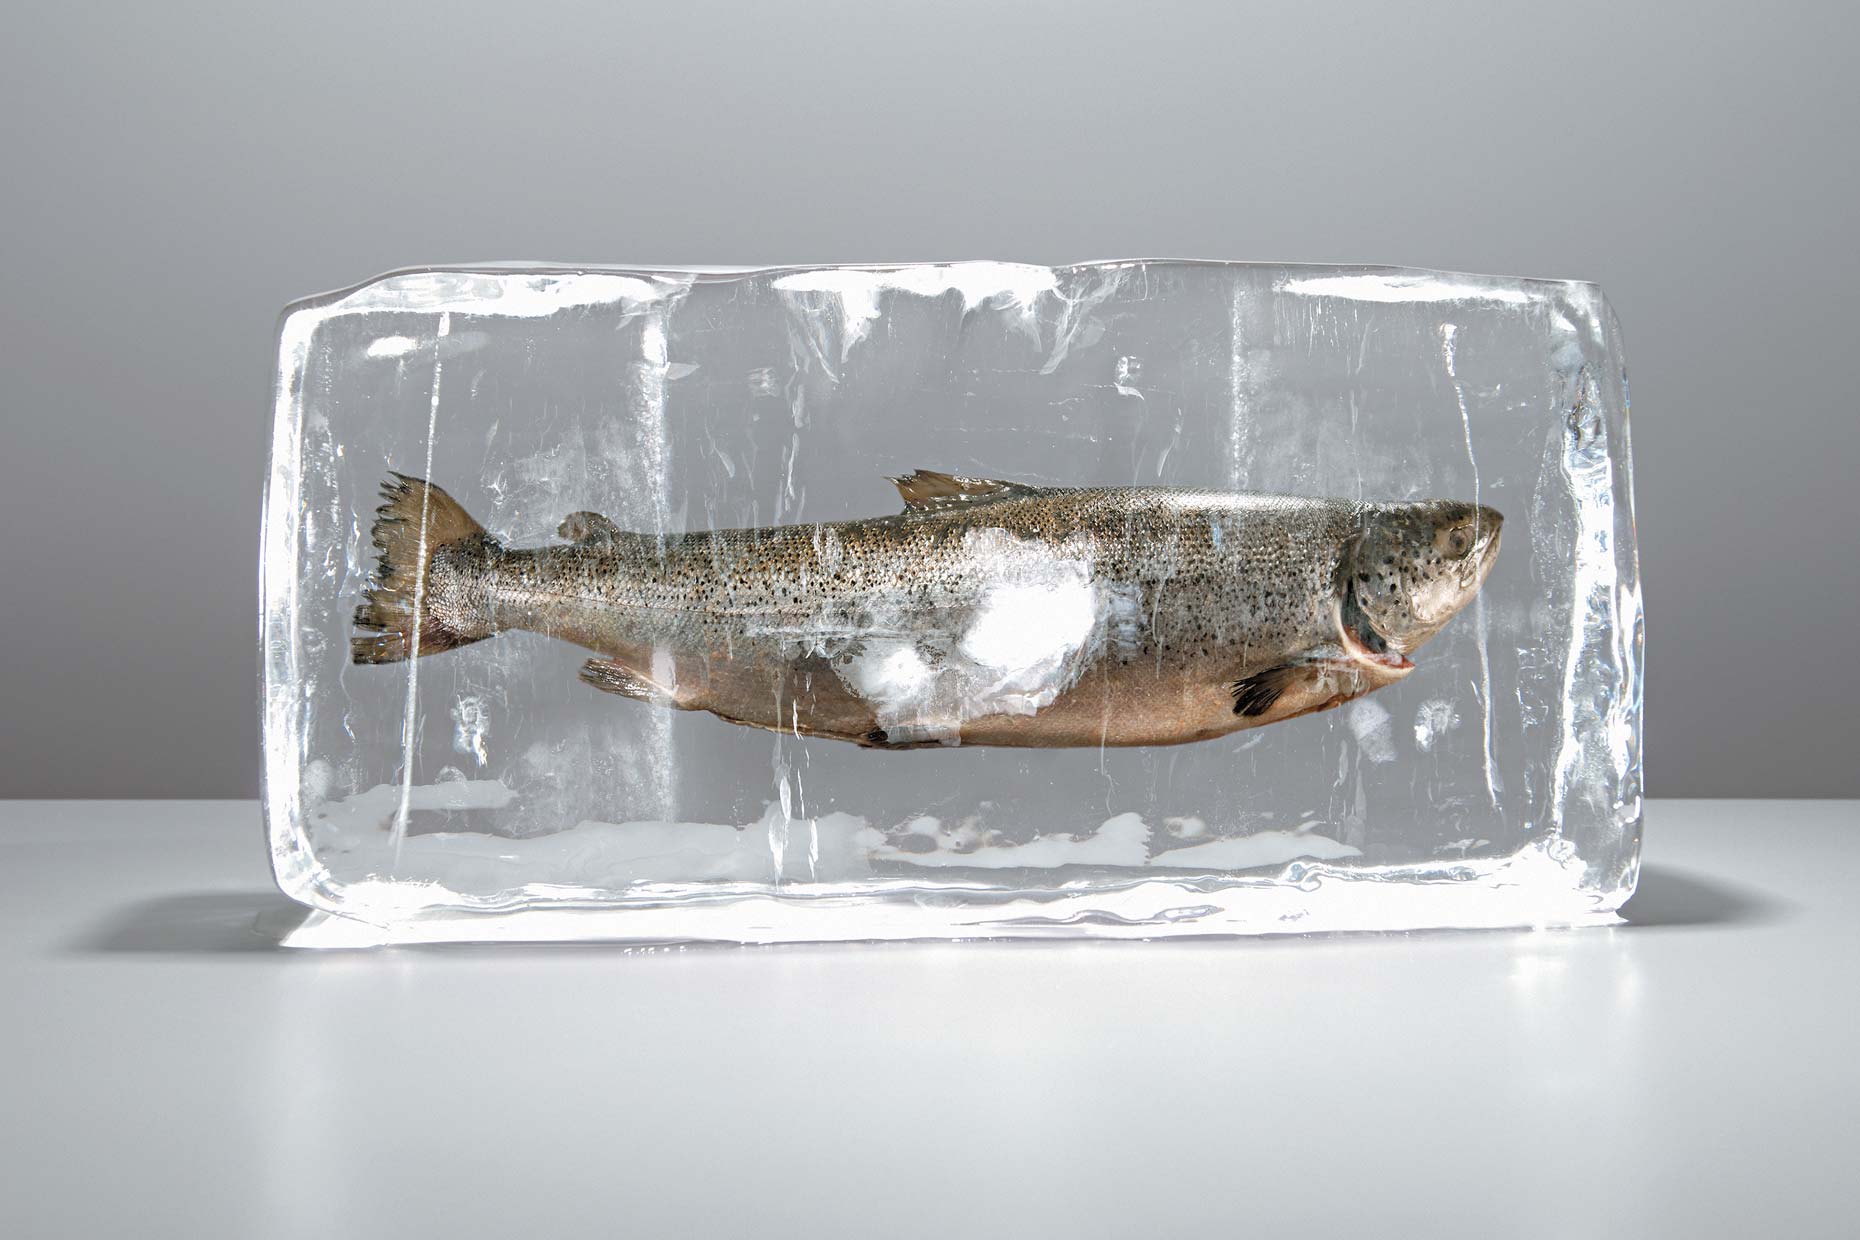 Frozen Fish in Ice